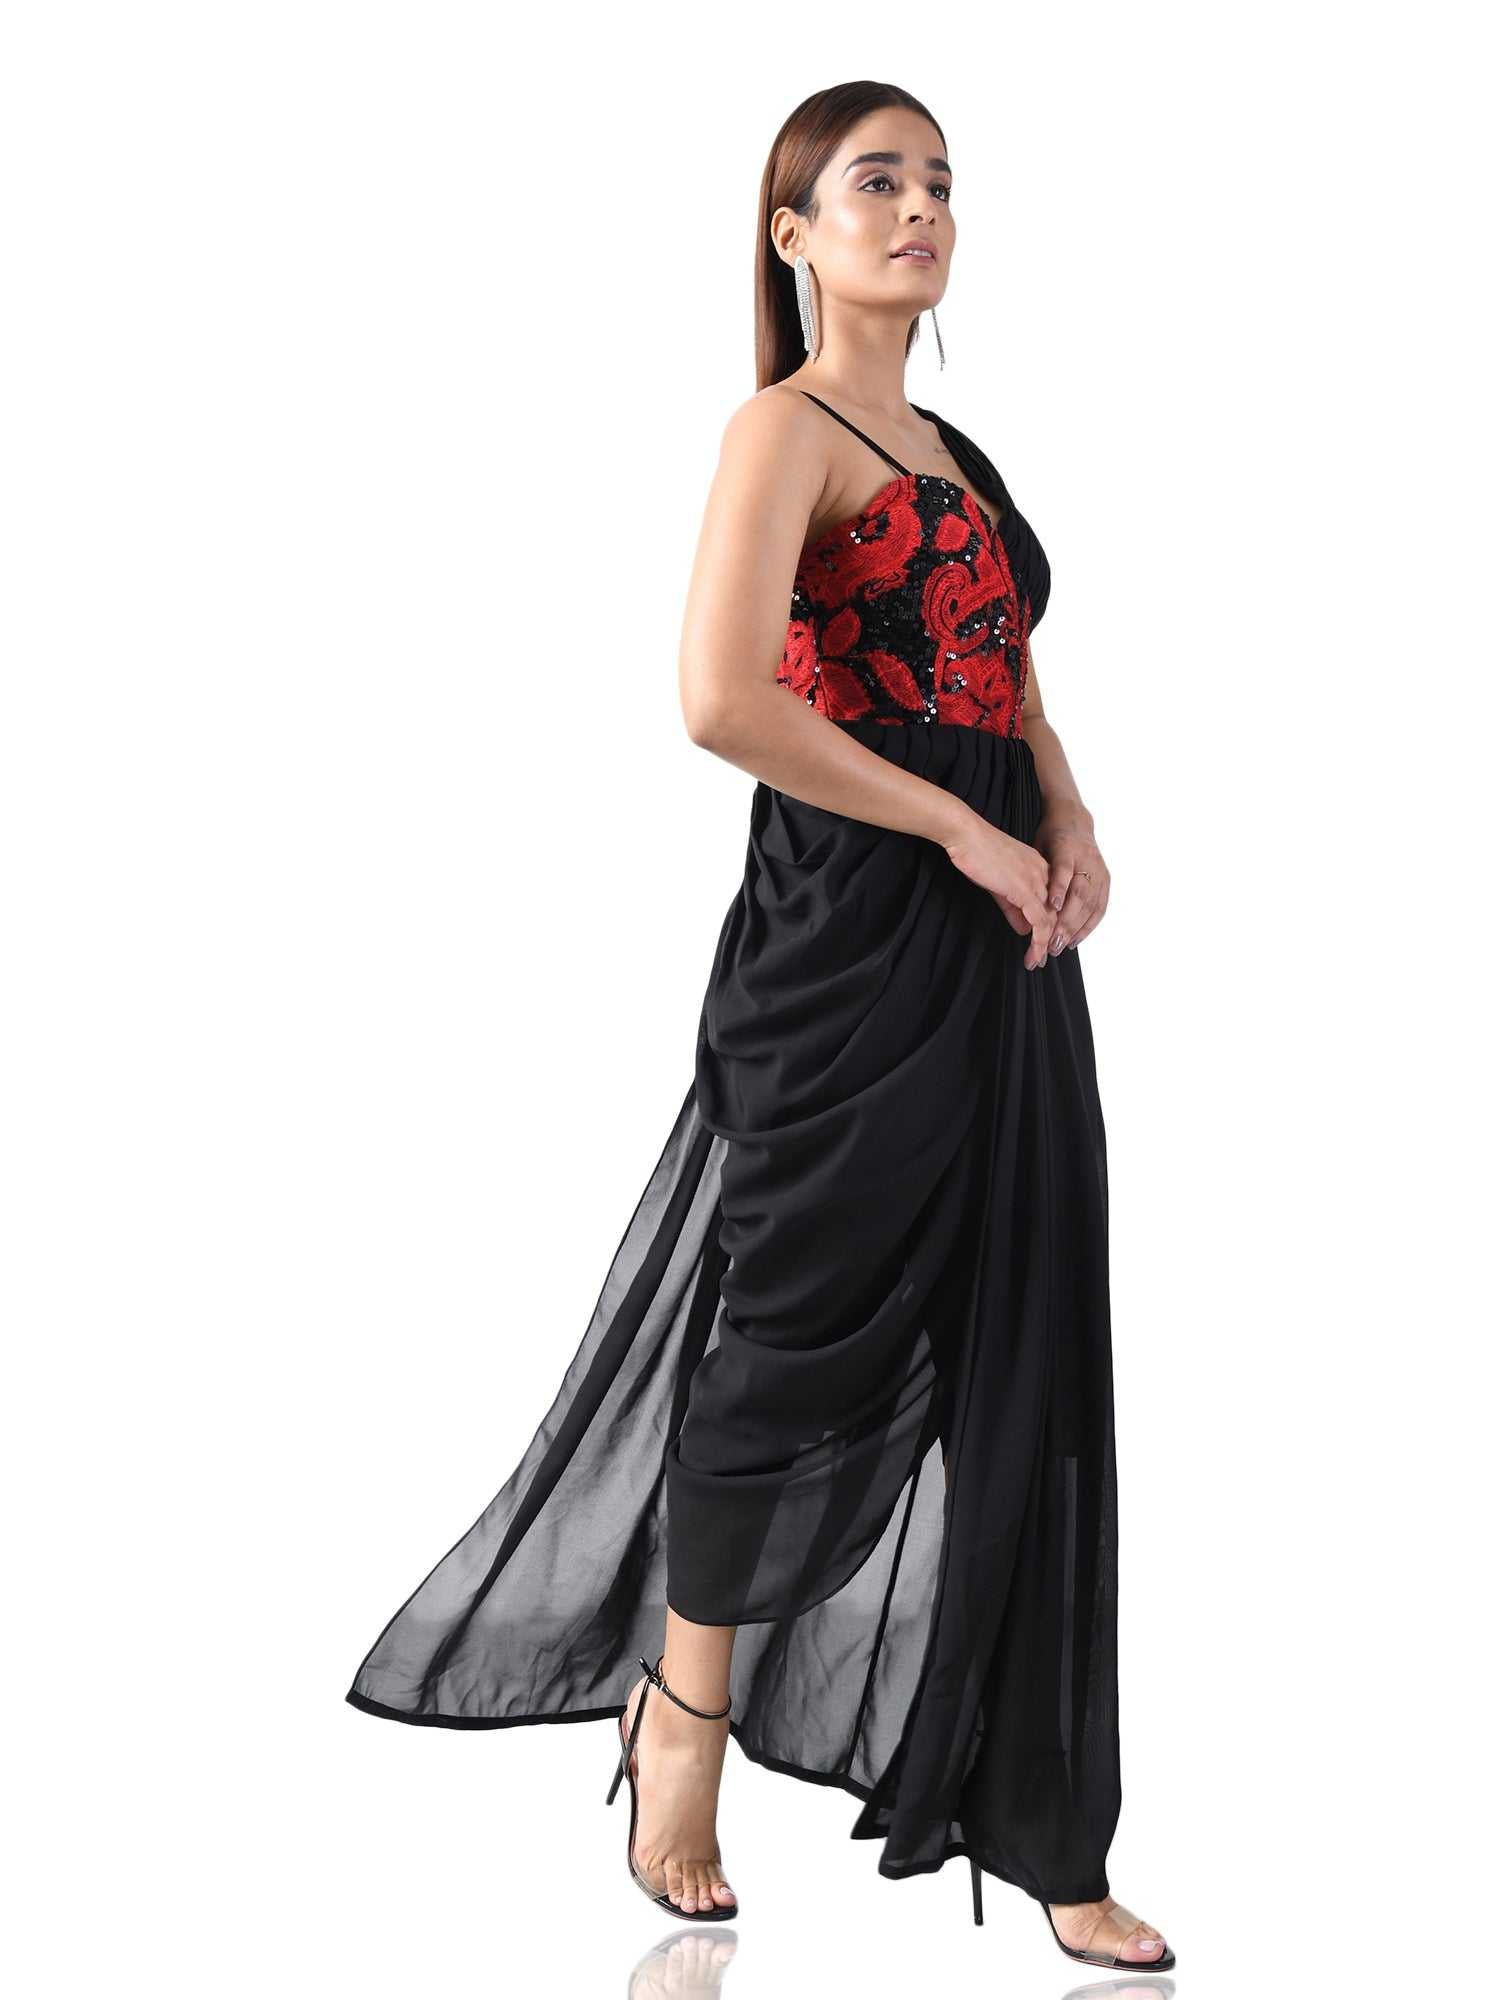 paola embroired corset black draped dress